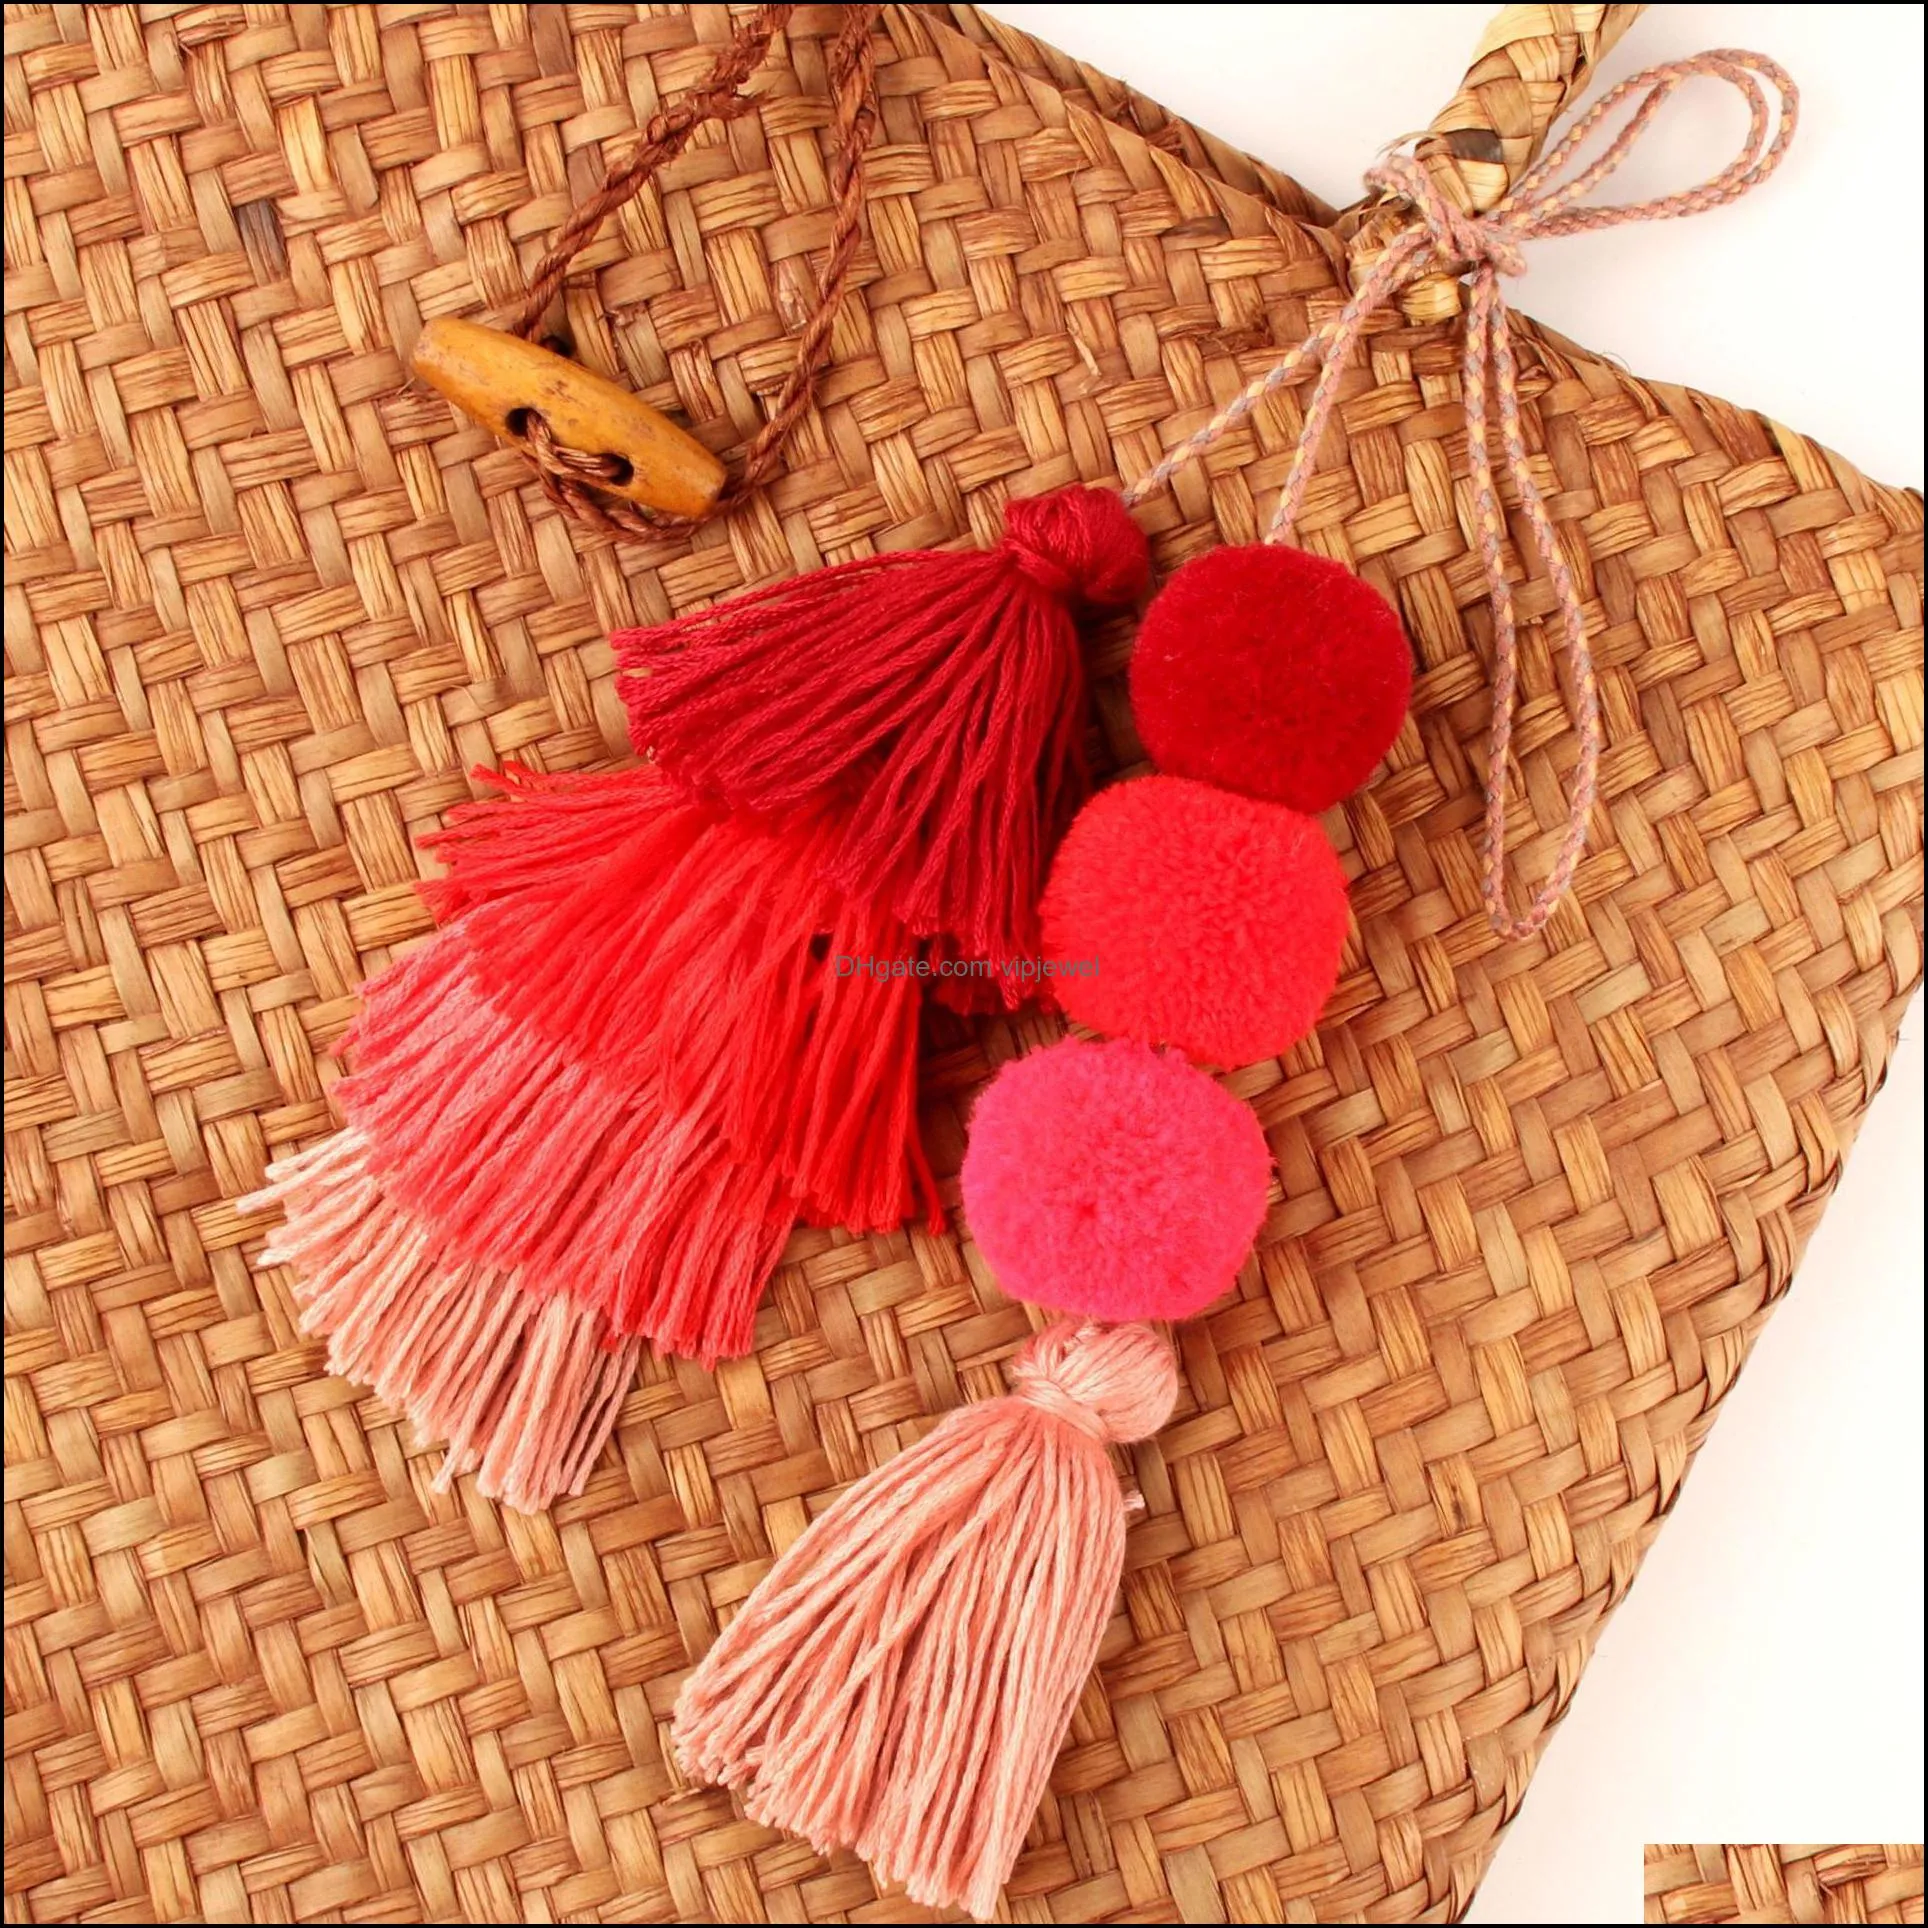 cute pompom tassel keyring boho bag charm pendant keychain for women purse handbag decor jewelry y423z